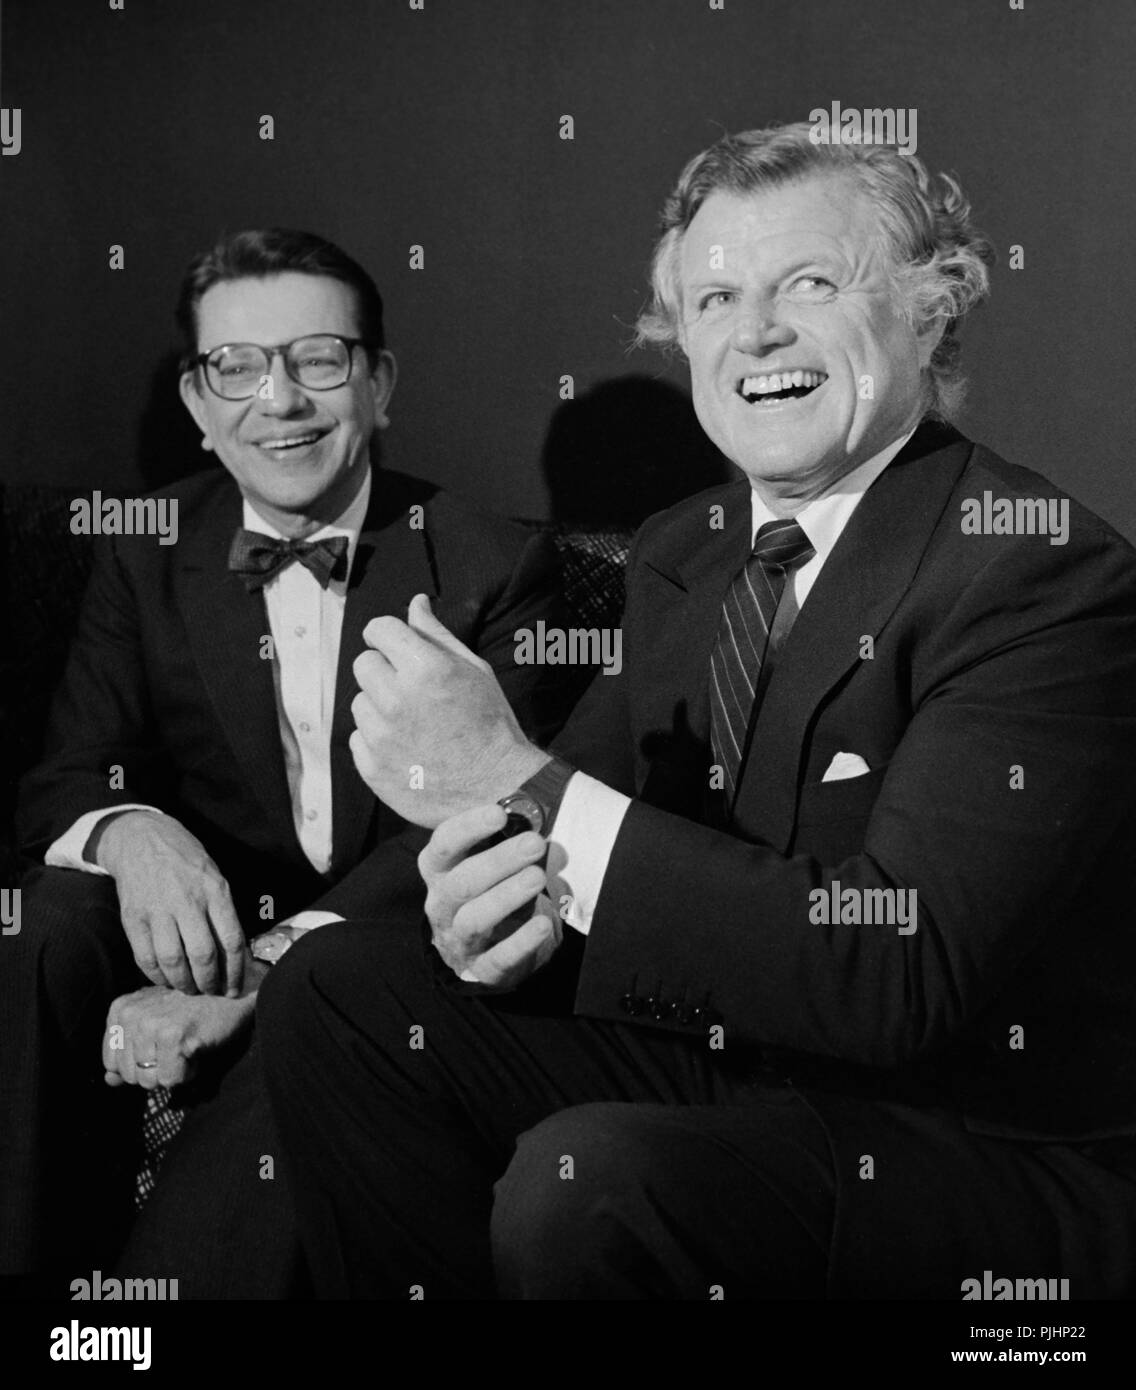 Illinois Senator Paul Simon, left, and Massachusetts Senator Ted Kennedy share a laugh together, ca. 1984. Stock Photo